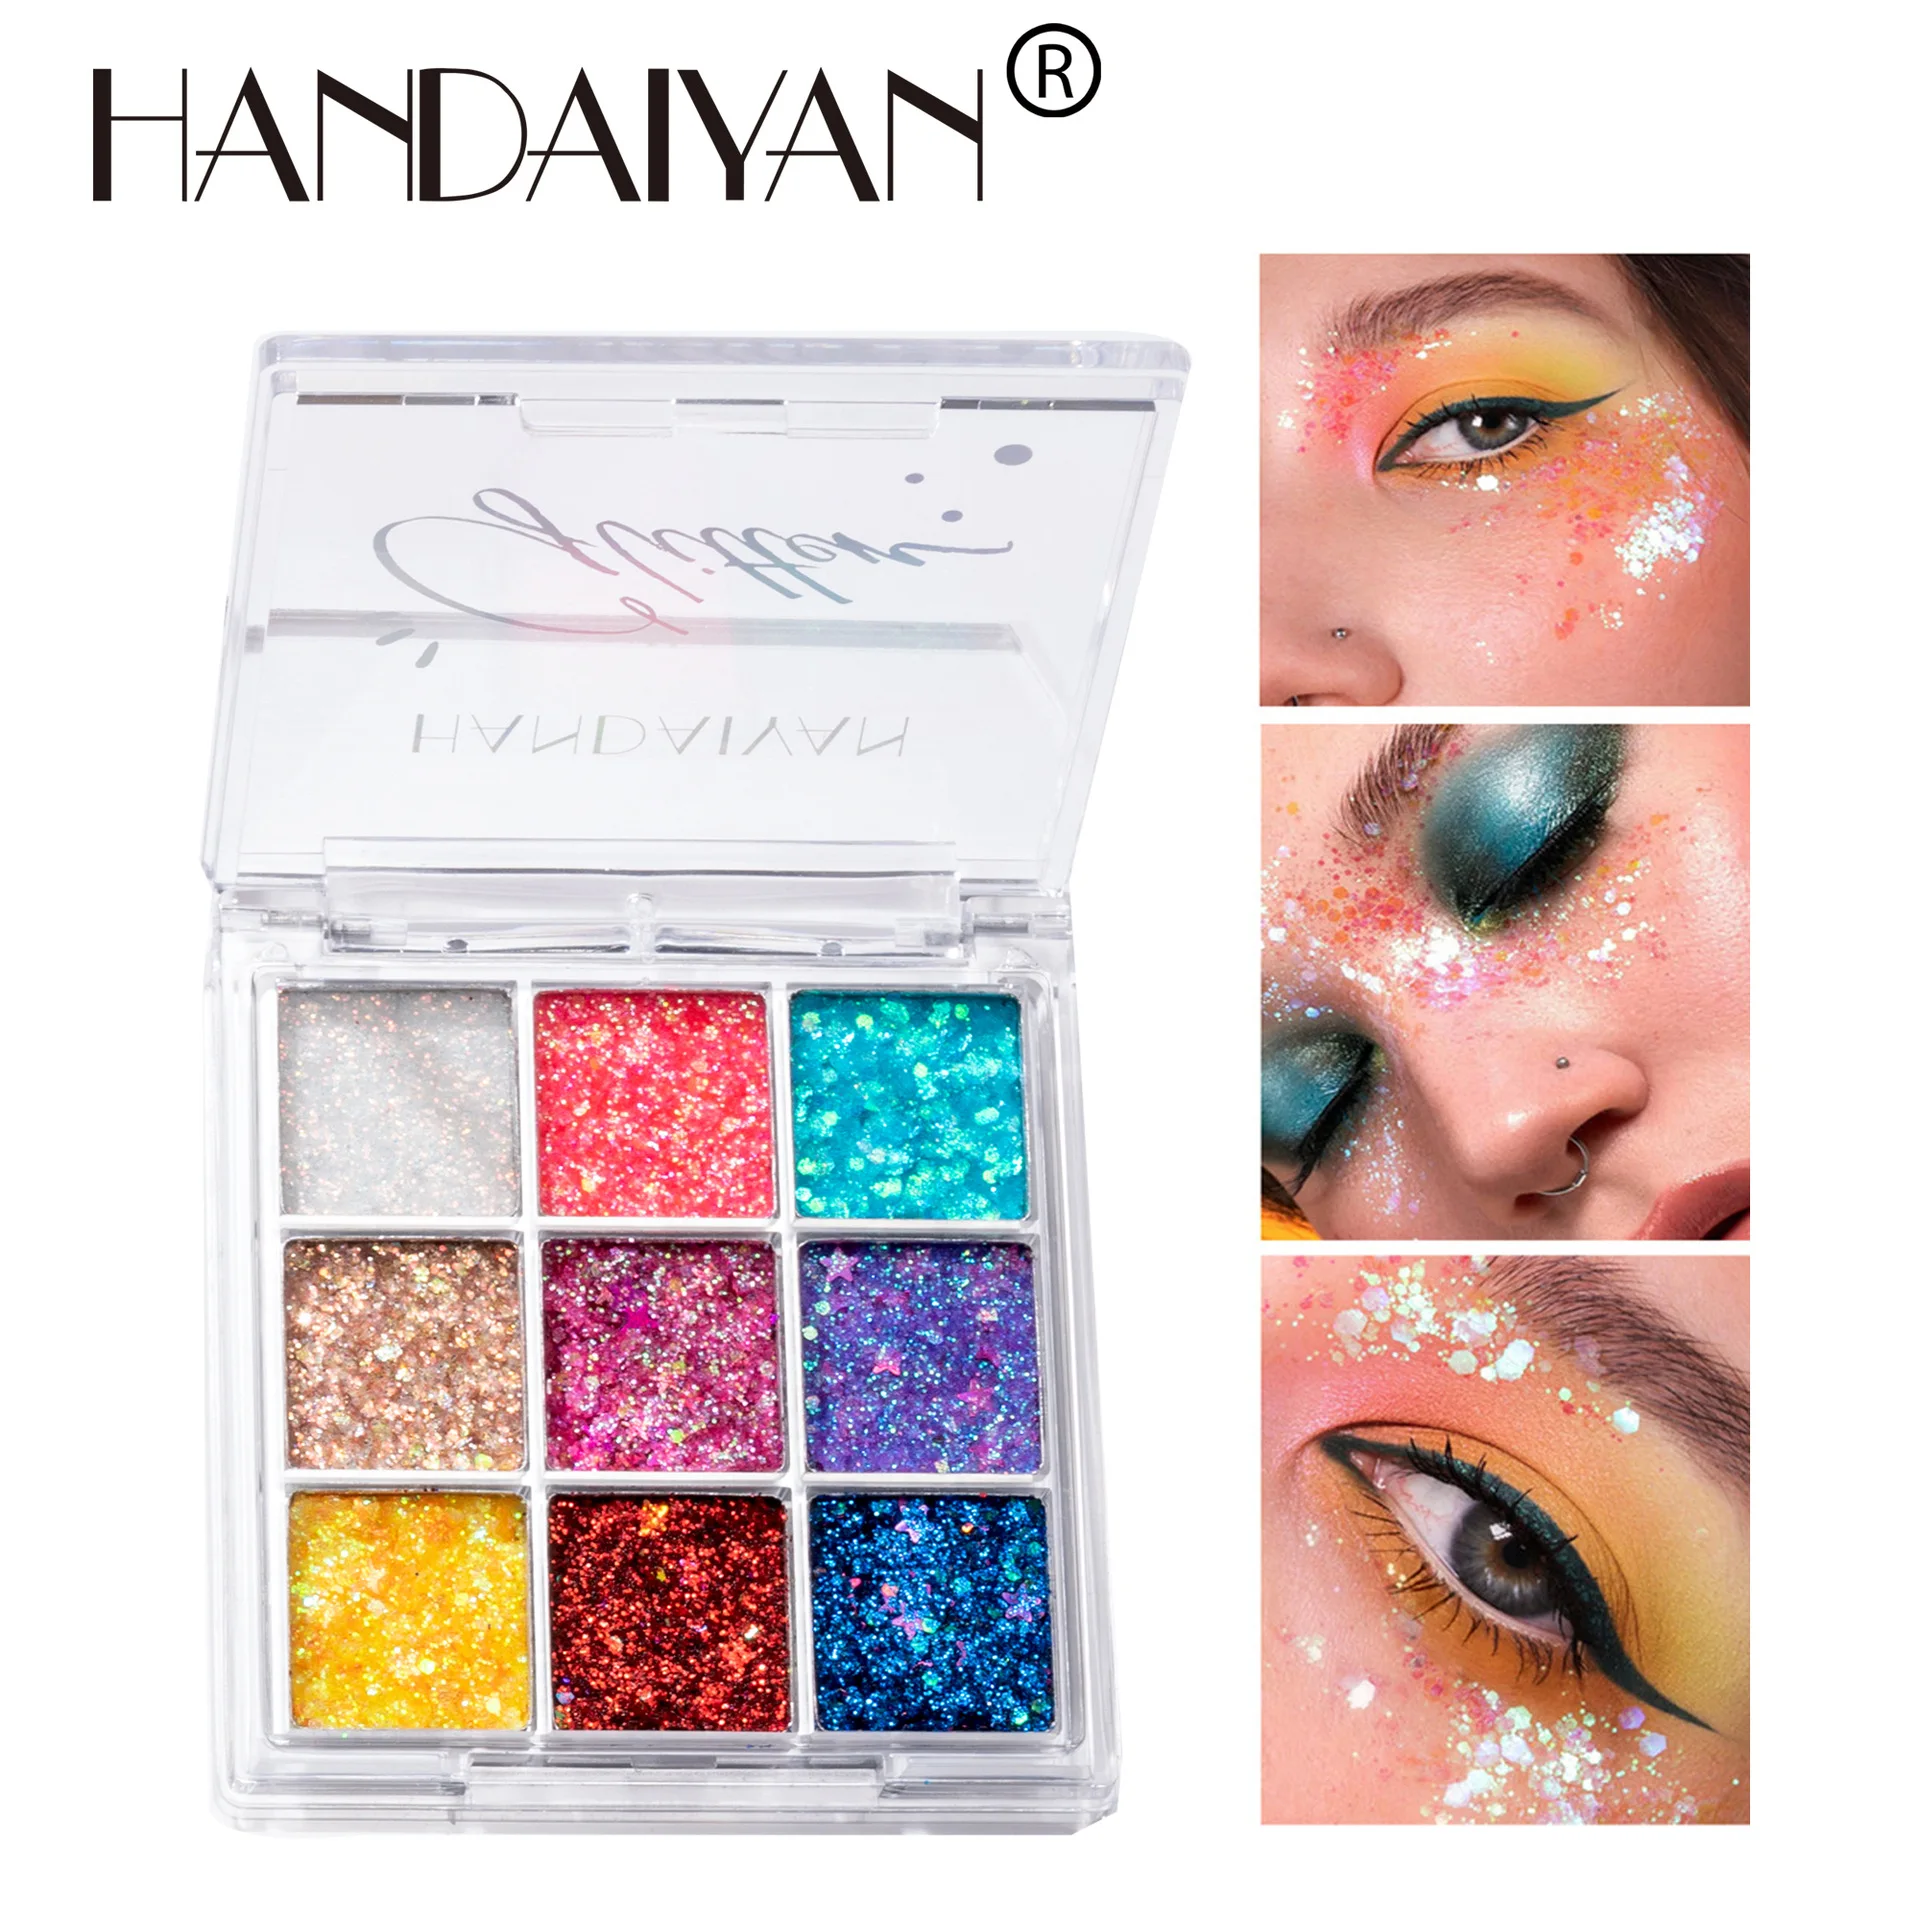 

HANDAIYAN Glitter Eyeshadow Palette Sequins for Eyes Face Diamond Eye Shadow Illuminator Rhinestone Mermaid Makeup Cosmetics